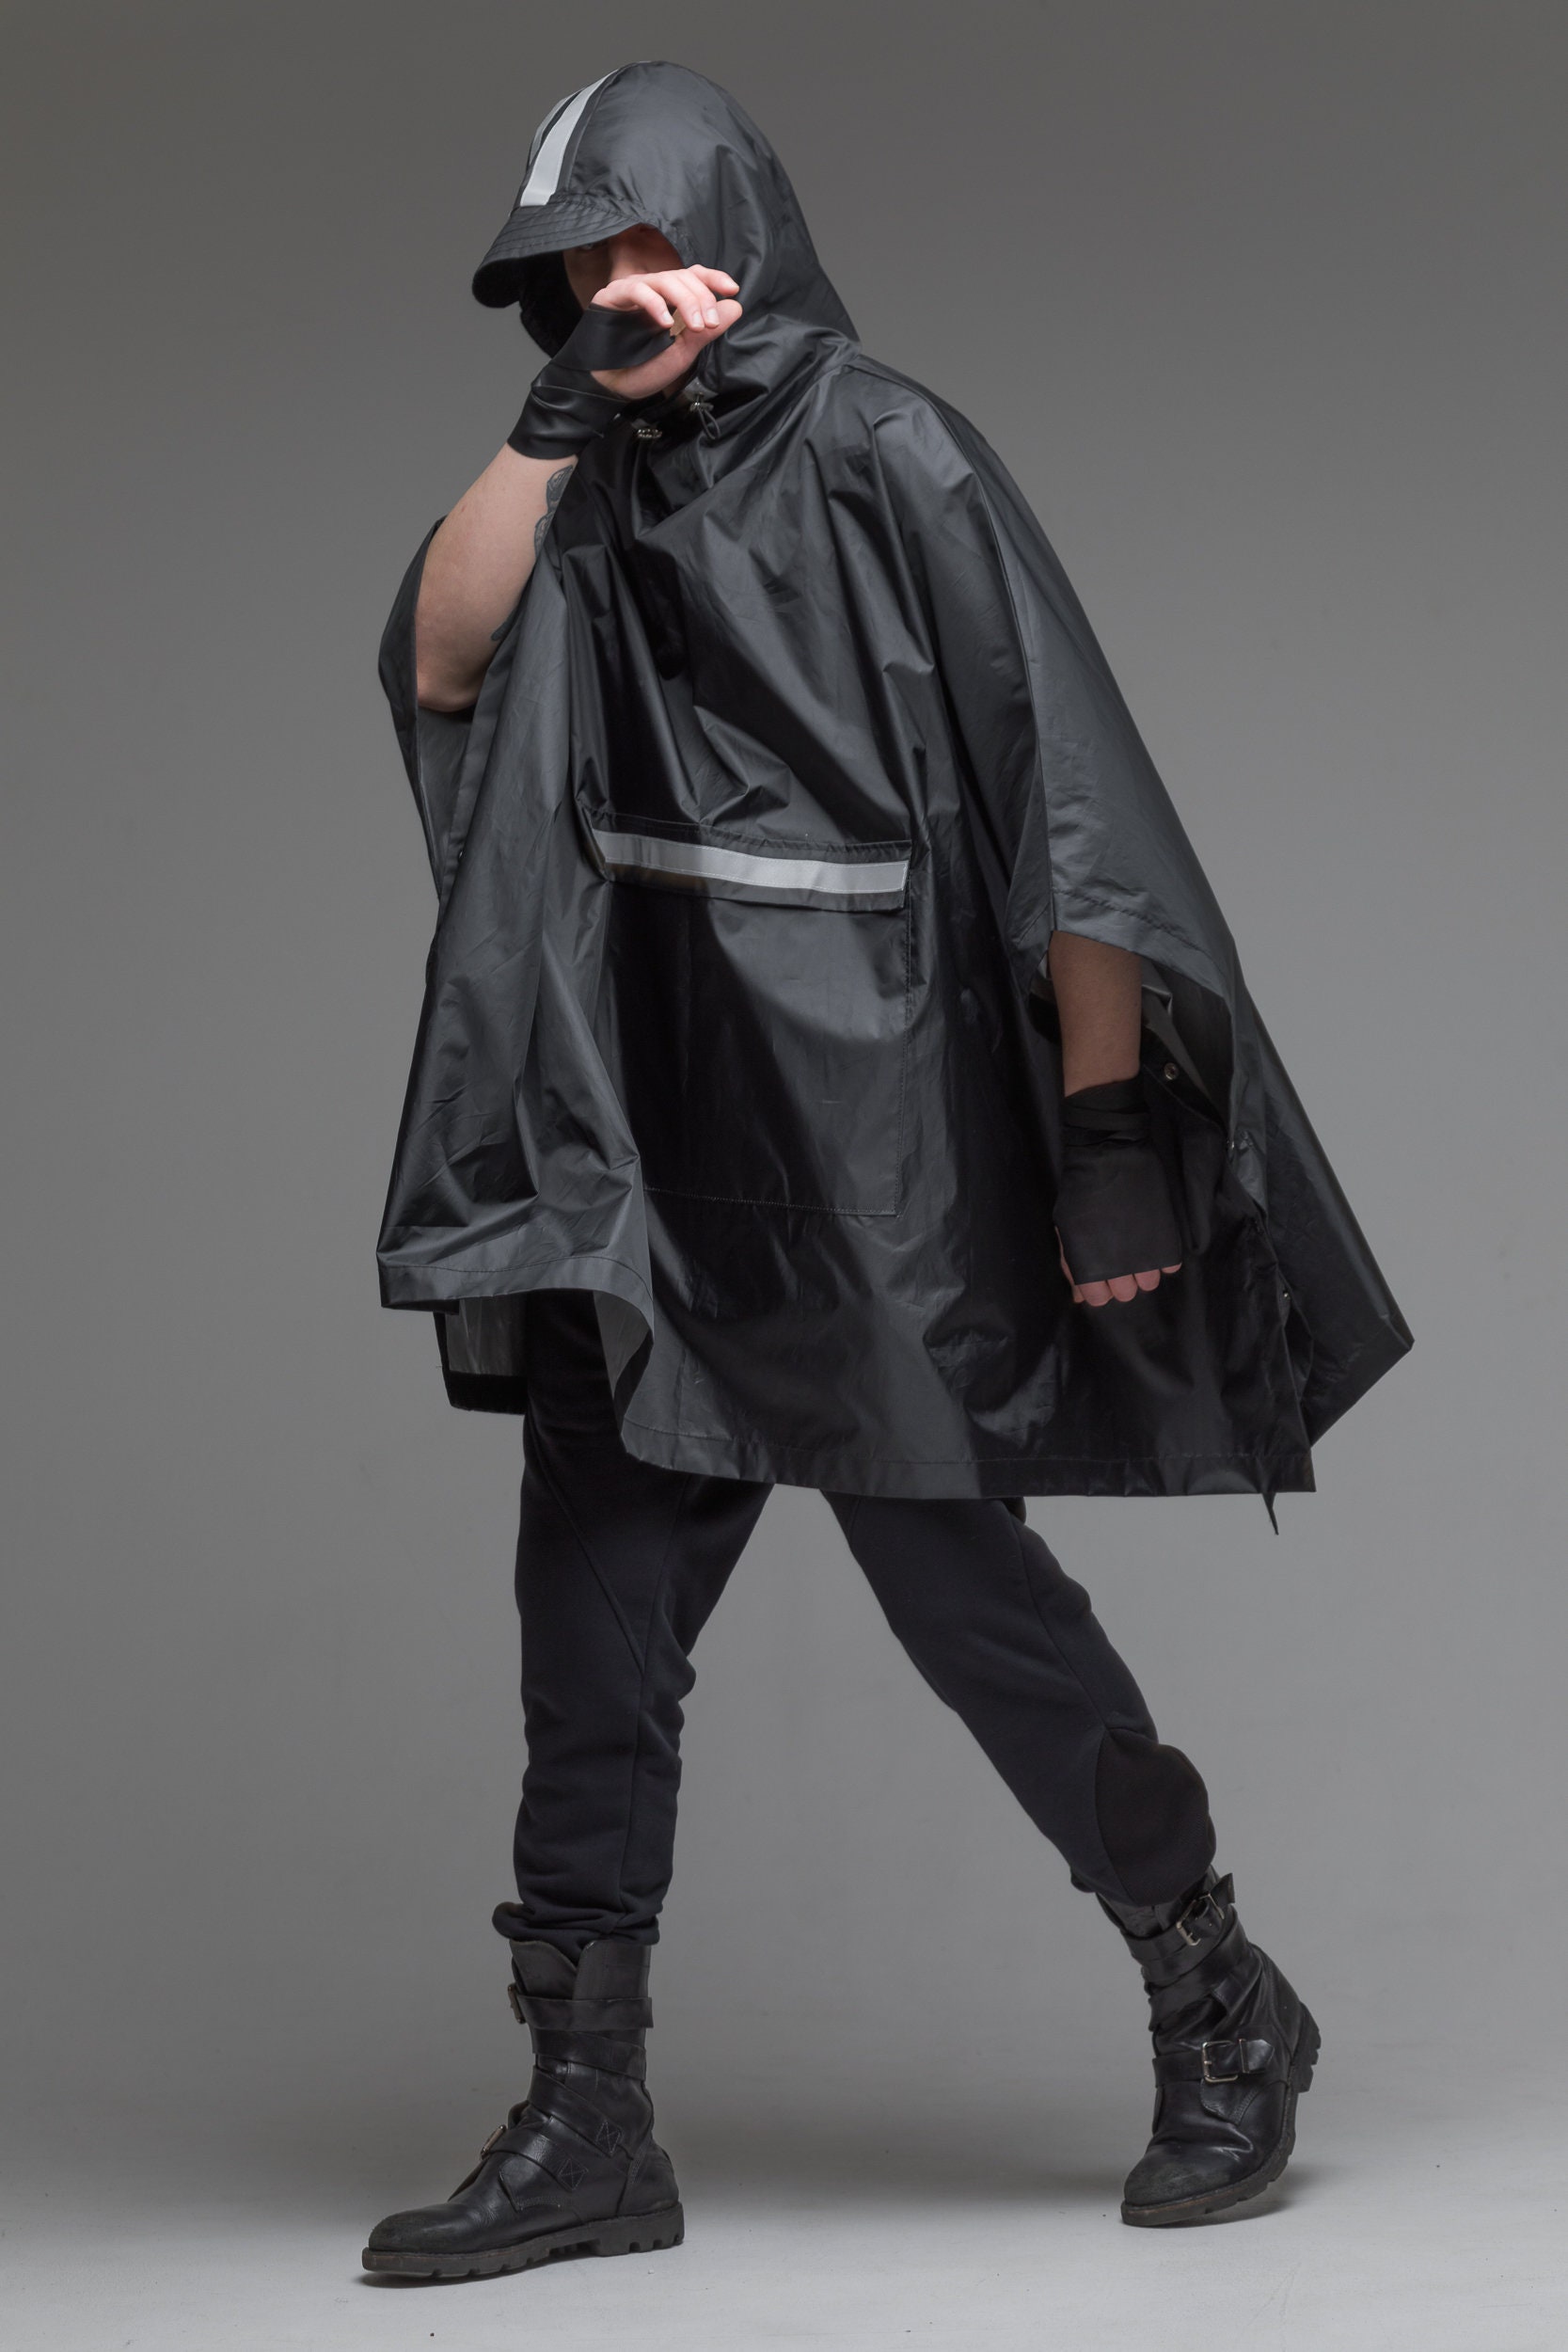 Hooded Men Black Rain Slicker Poncho Cape - Etsy